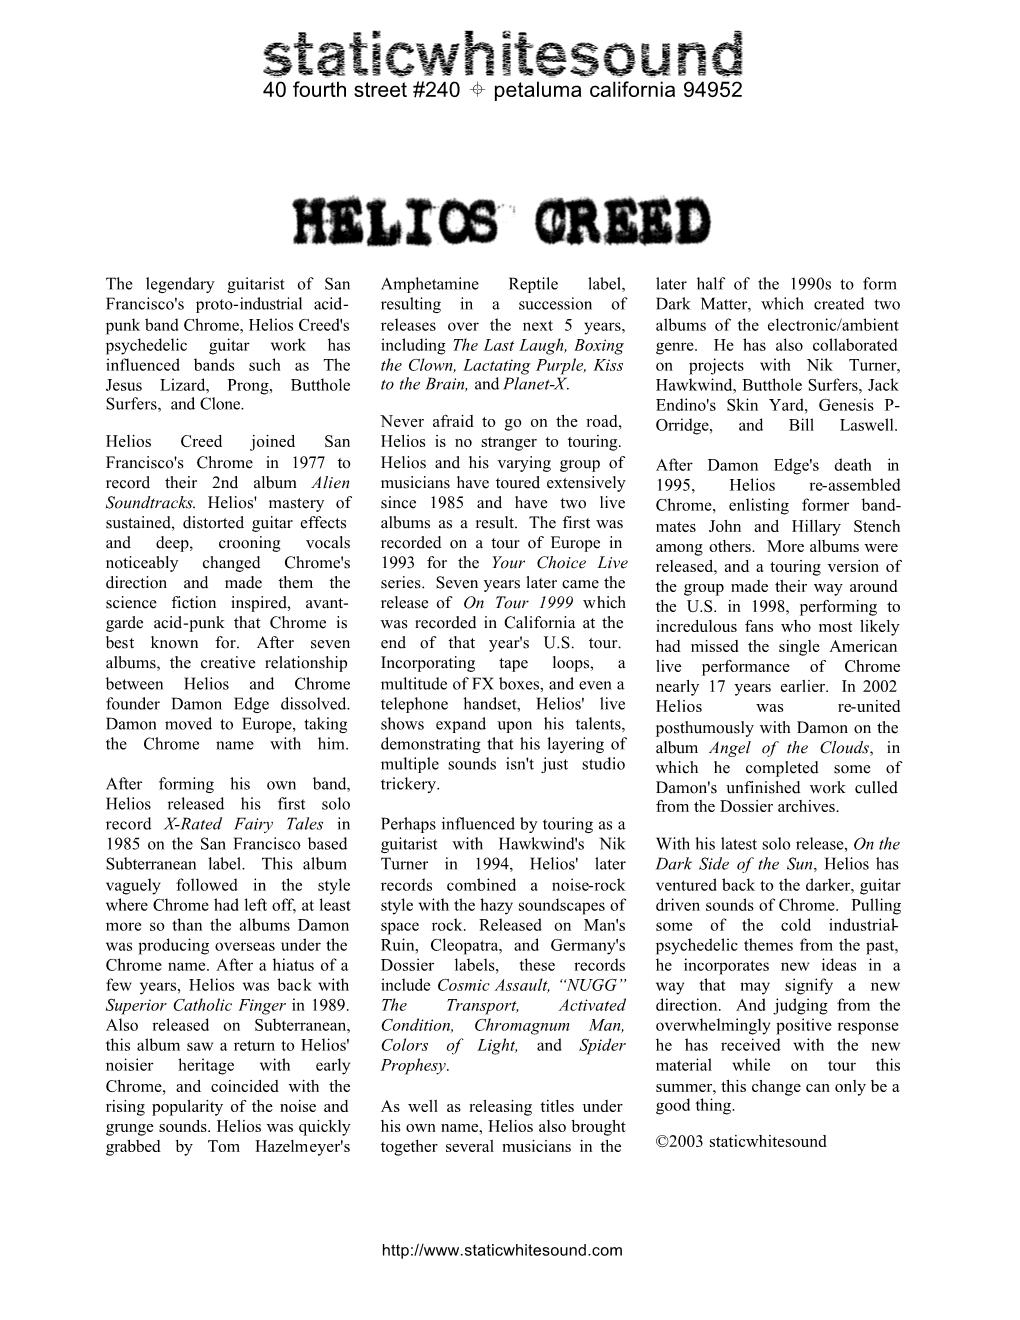 Helios Creed Biography 2003 (PDF)